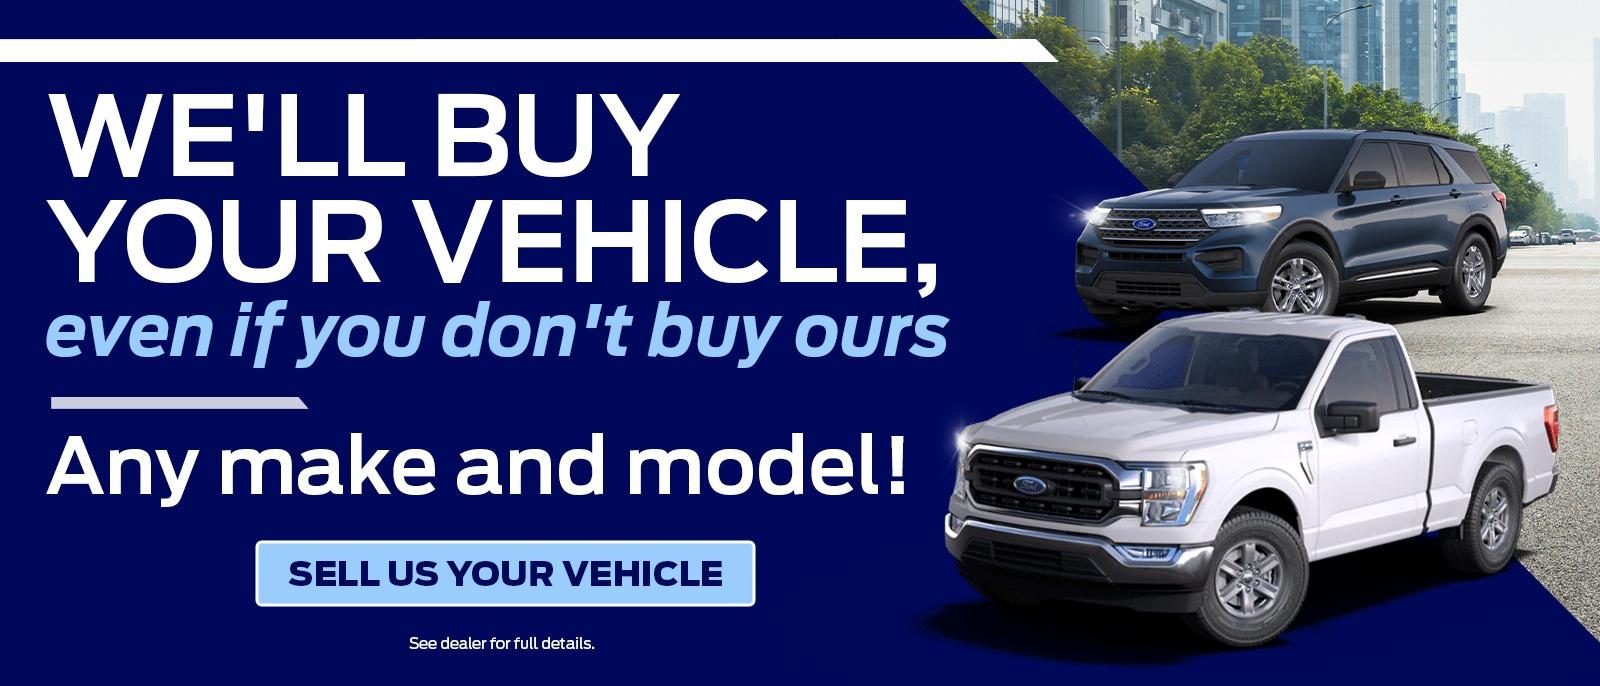 We'll Buy Your Vehicle